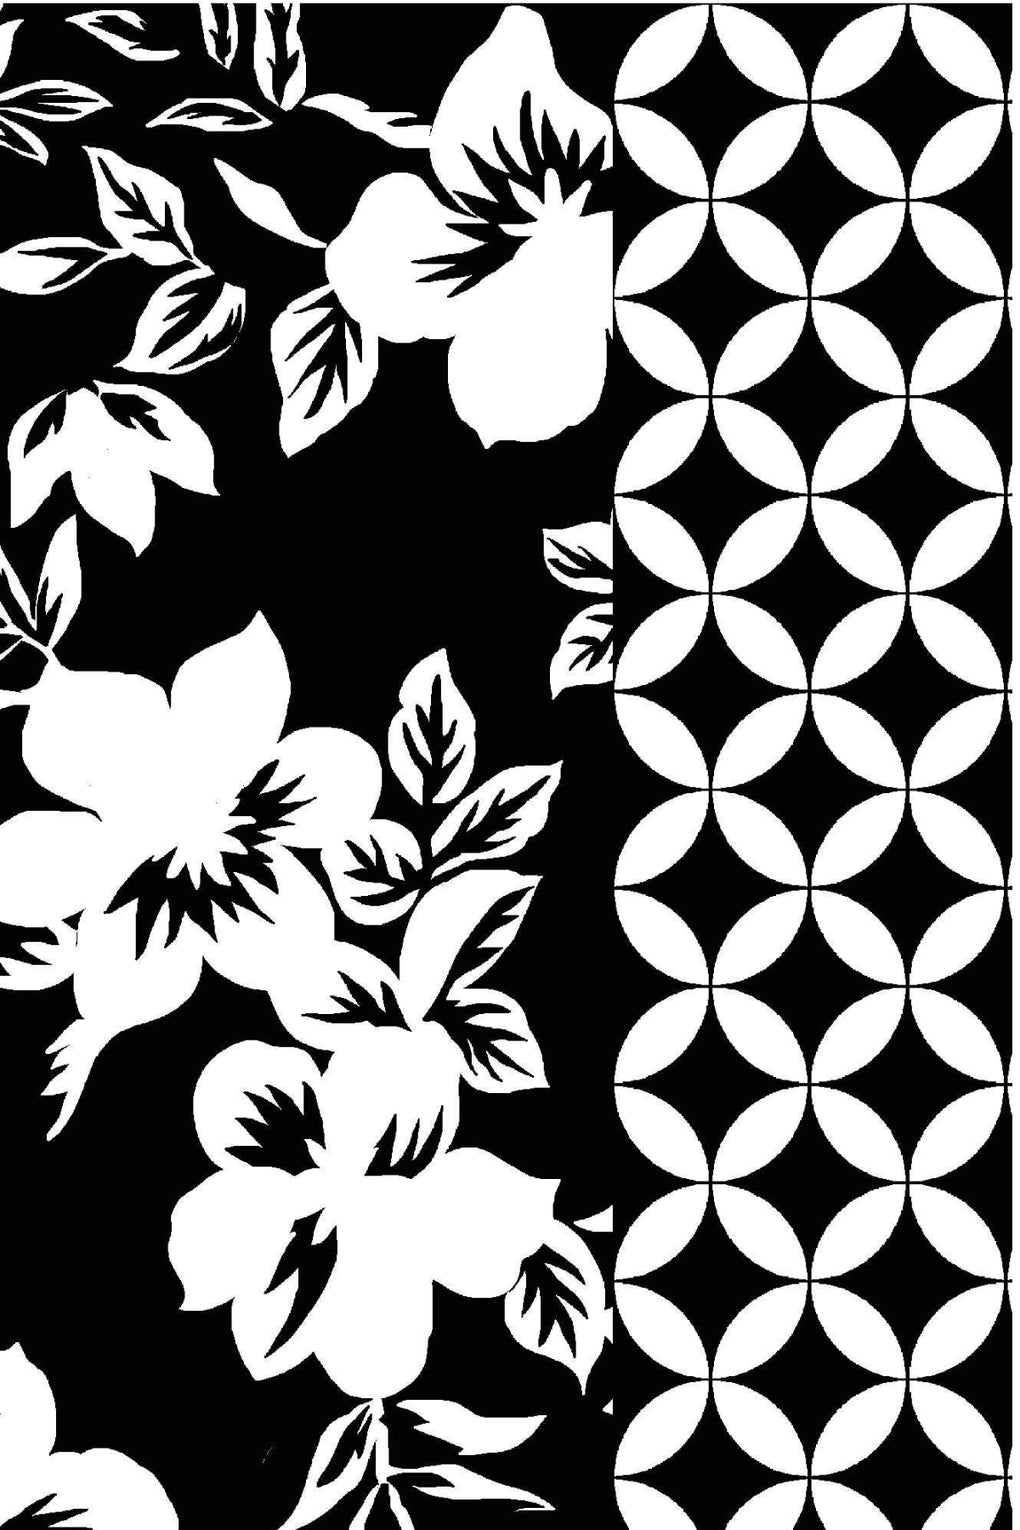 Flowers With Geometric Border (SE-1963_Black)